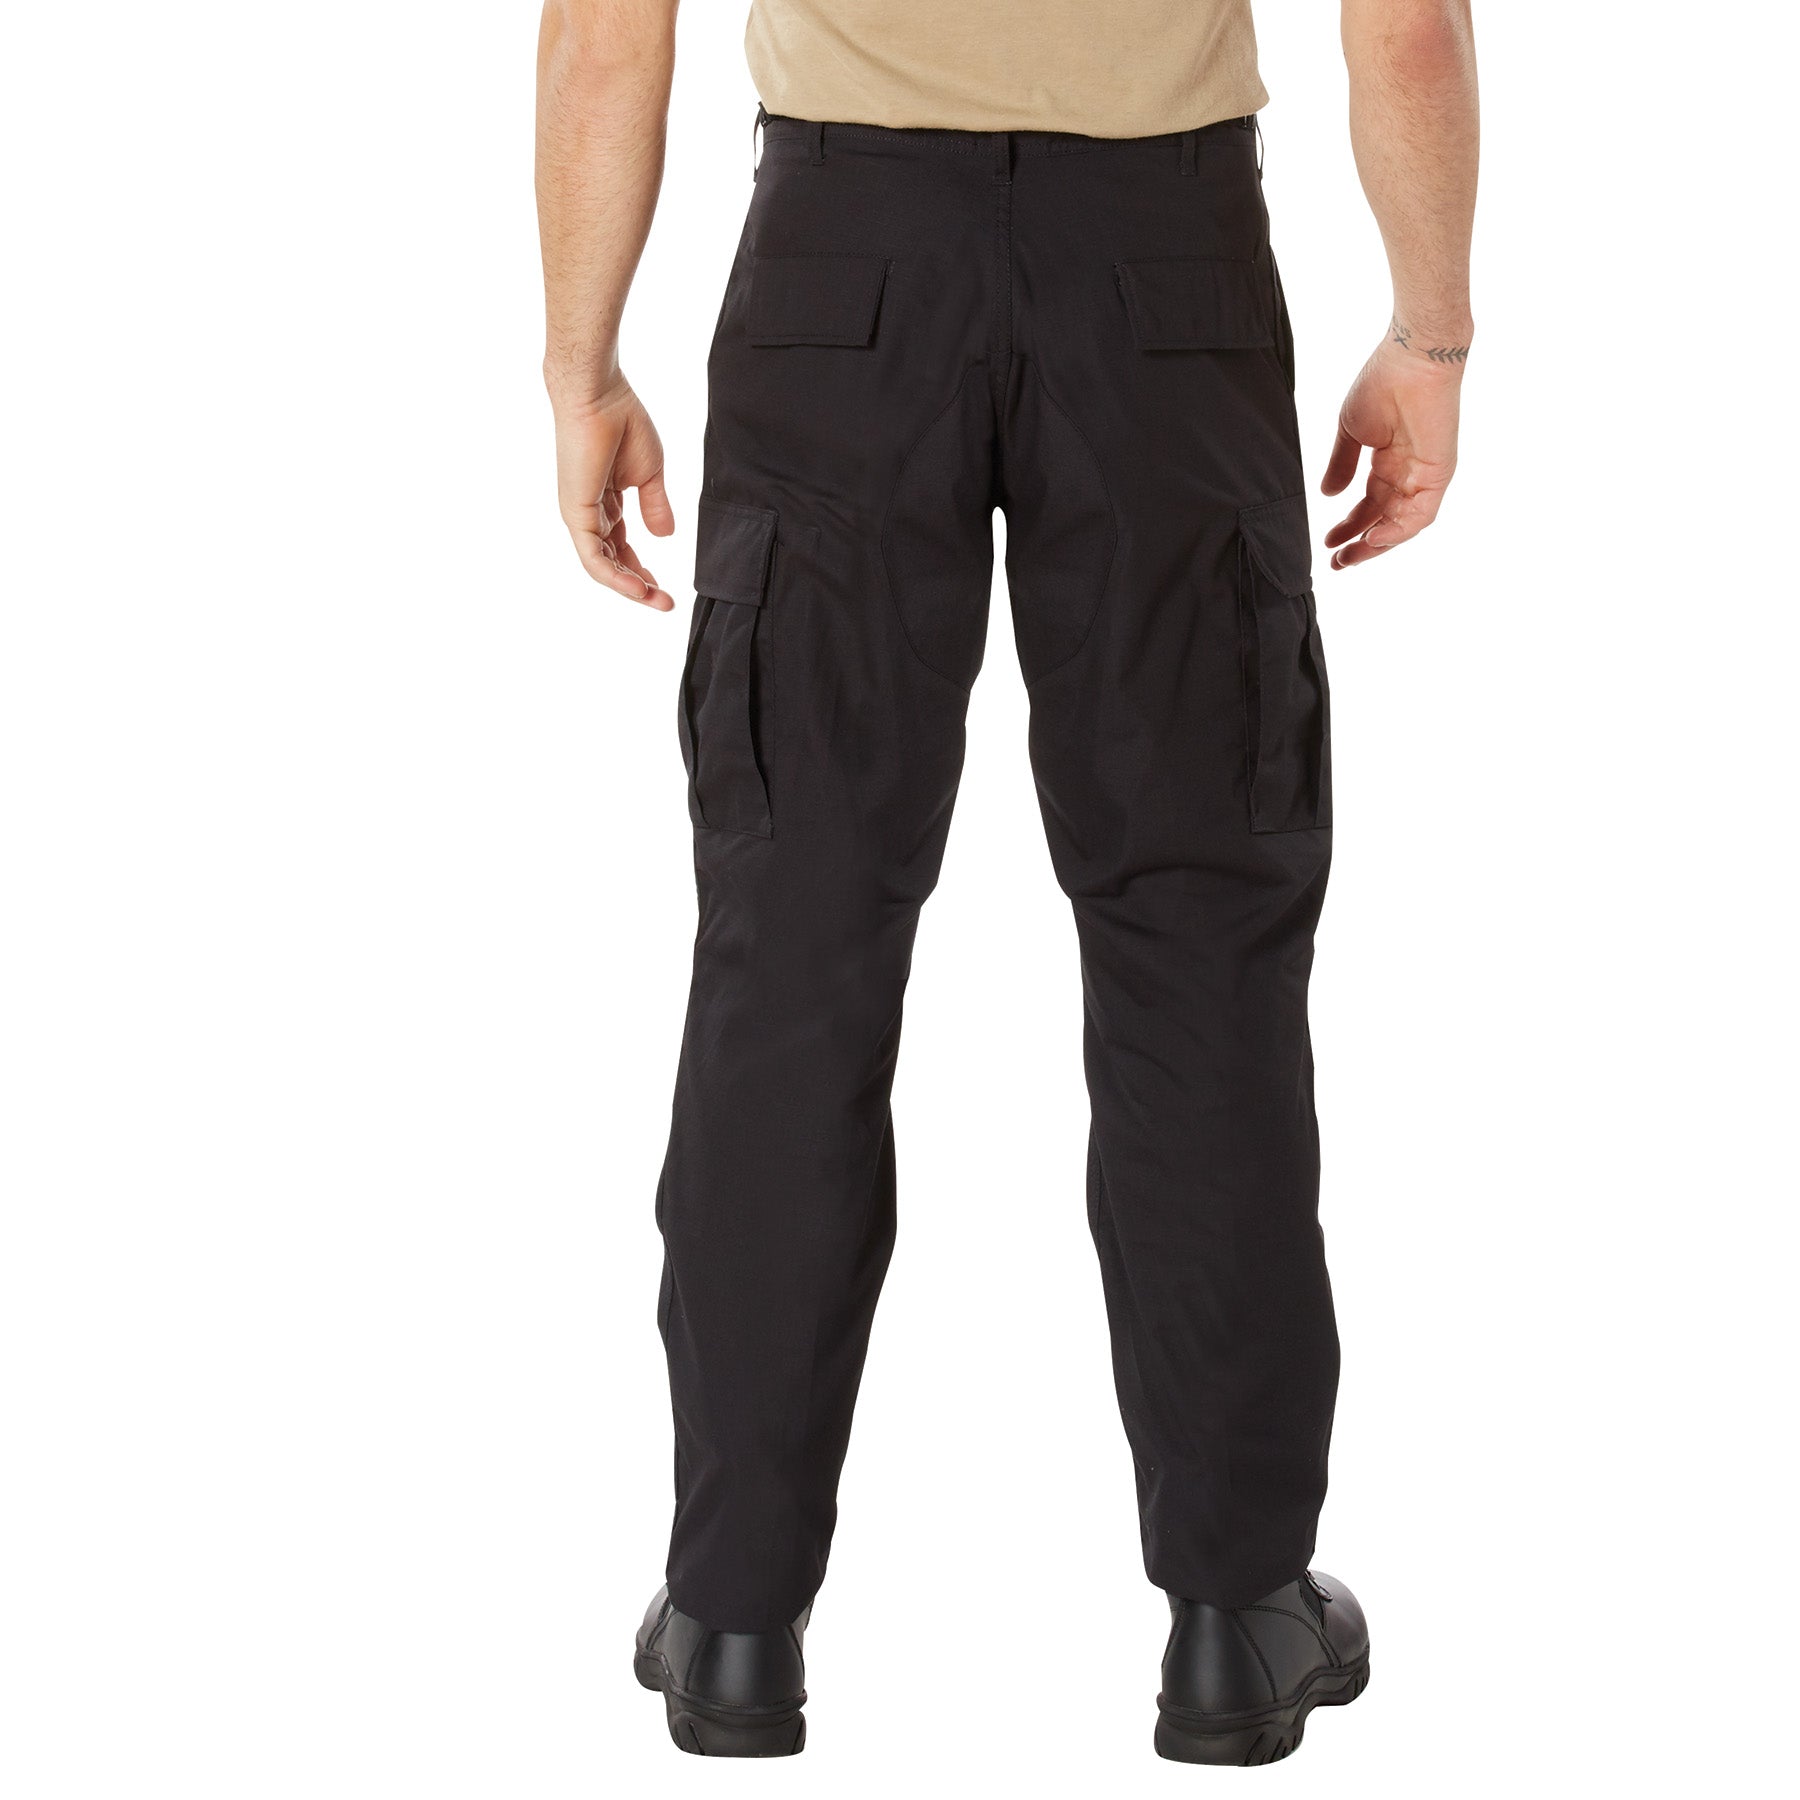 [SWAT] Poly/Cotton Rip-Stop Tactical BDU Pants